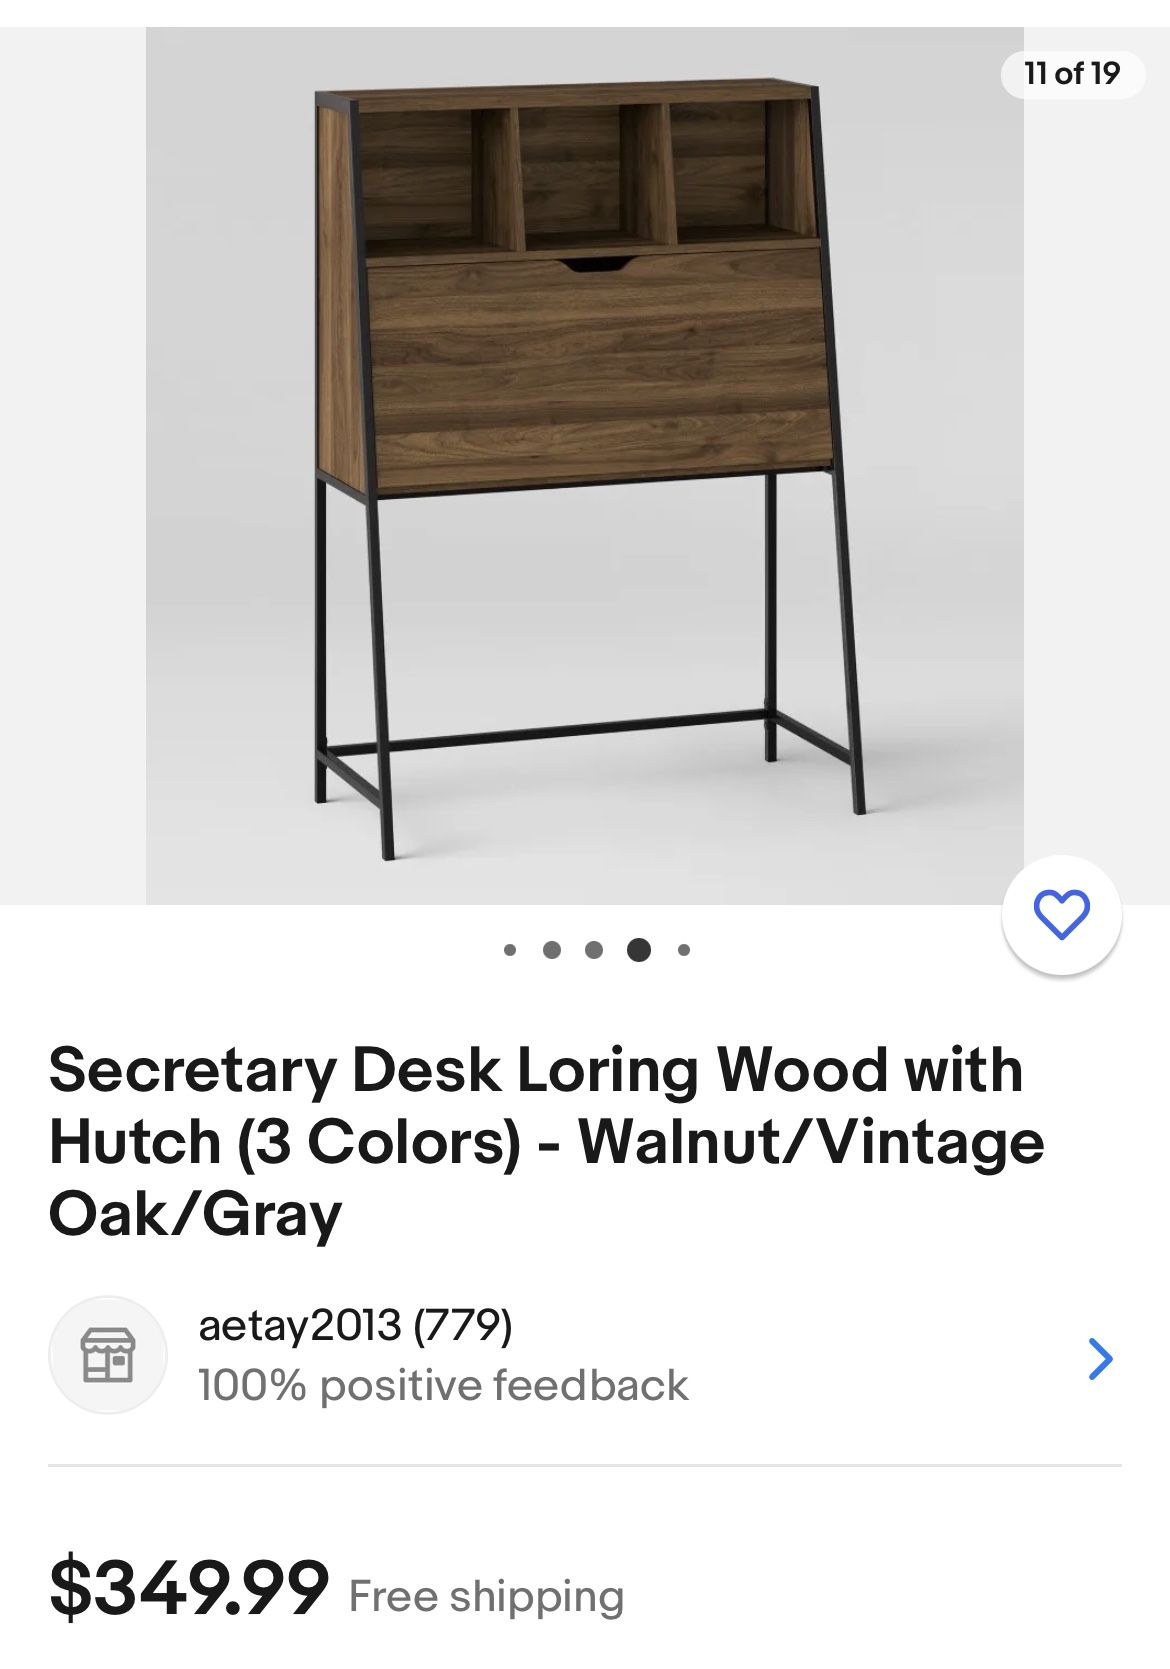 Secretary Desk Loring Wood with Hutch - Walnut/Vintage